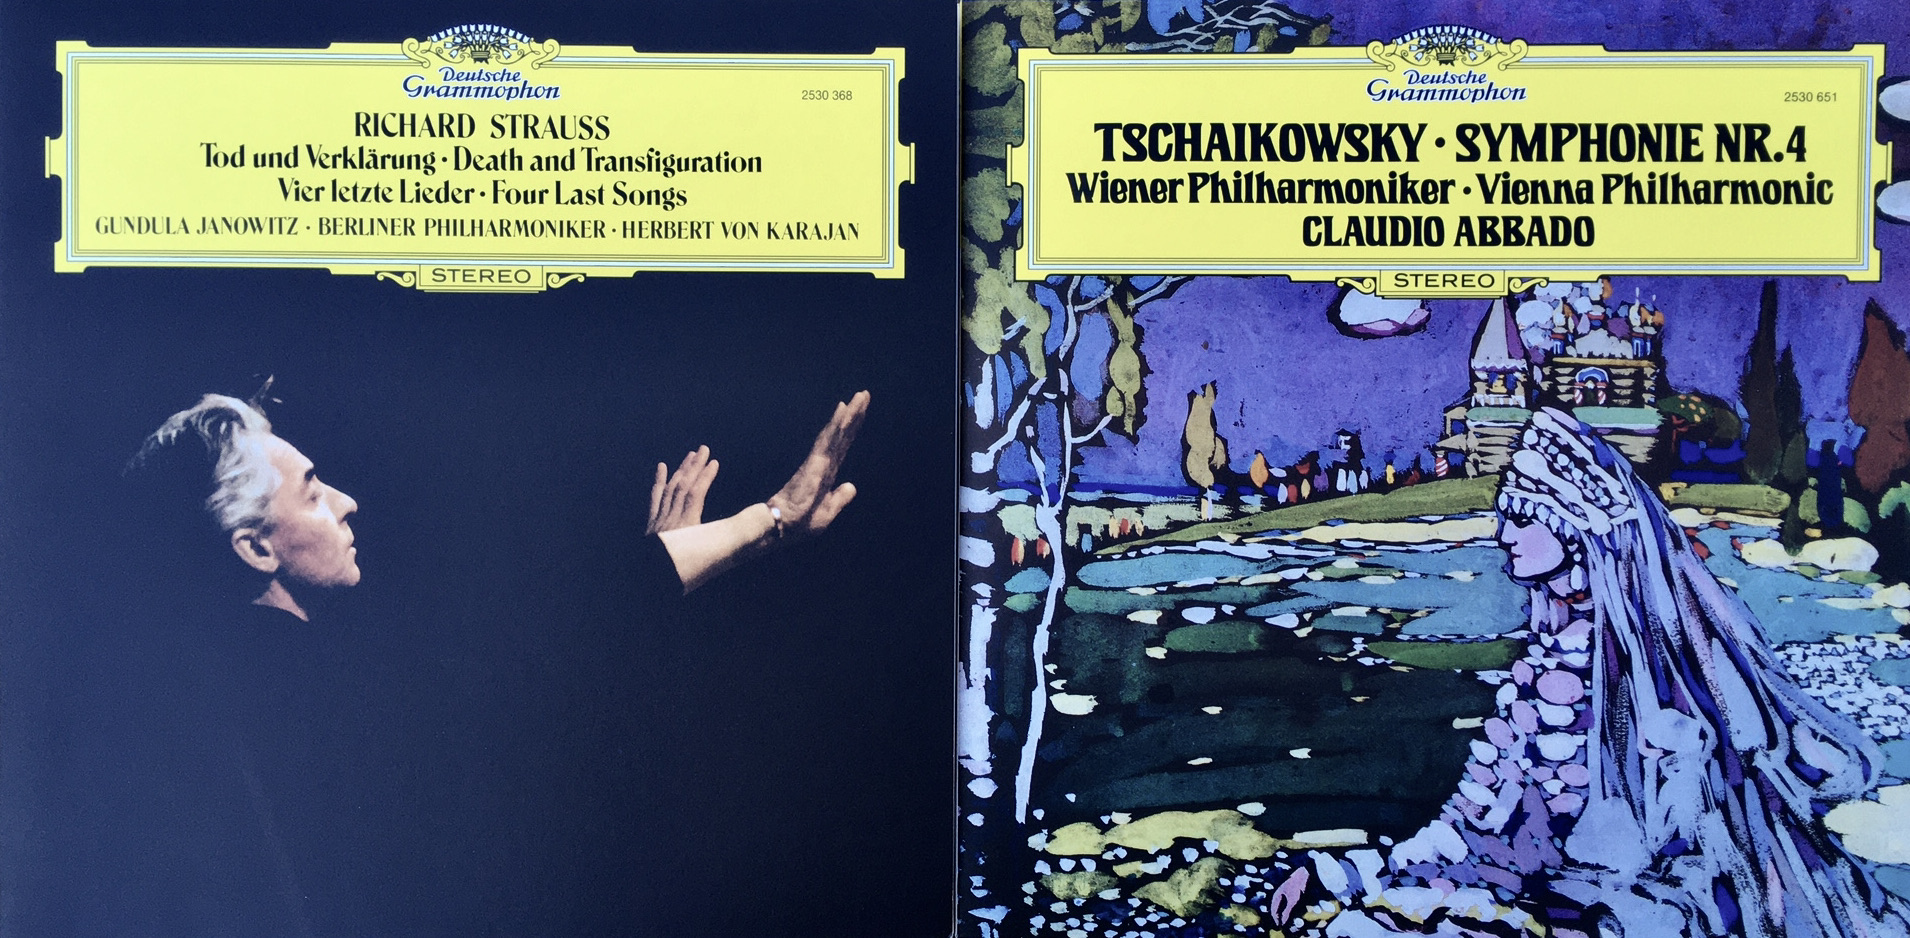 Dg Original Source Karajan Janowitz Four Last Songs Abbado Tchaikovsky 4th symphony